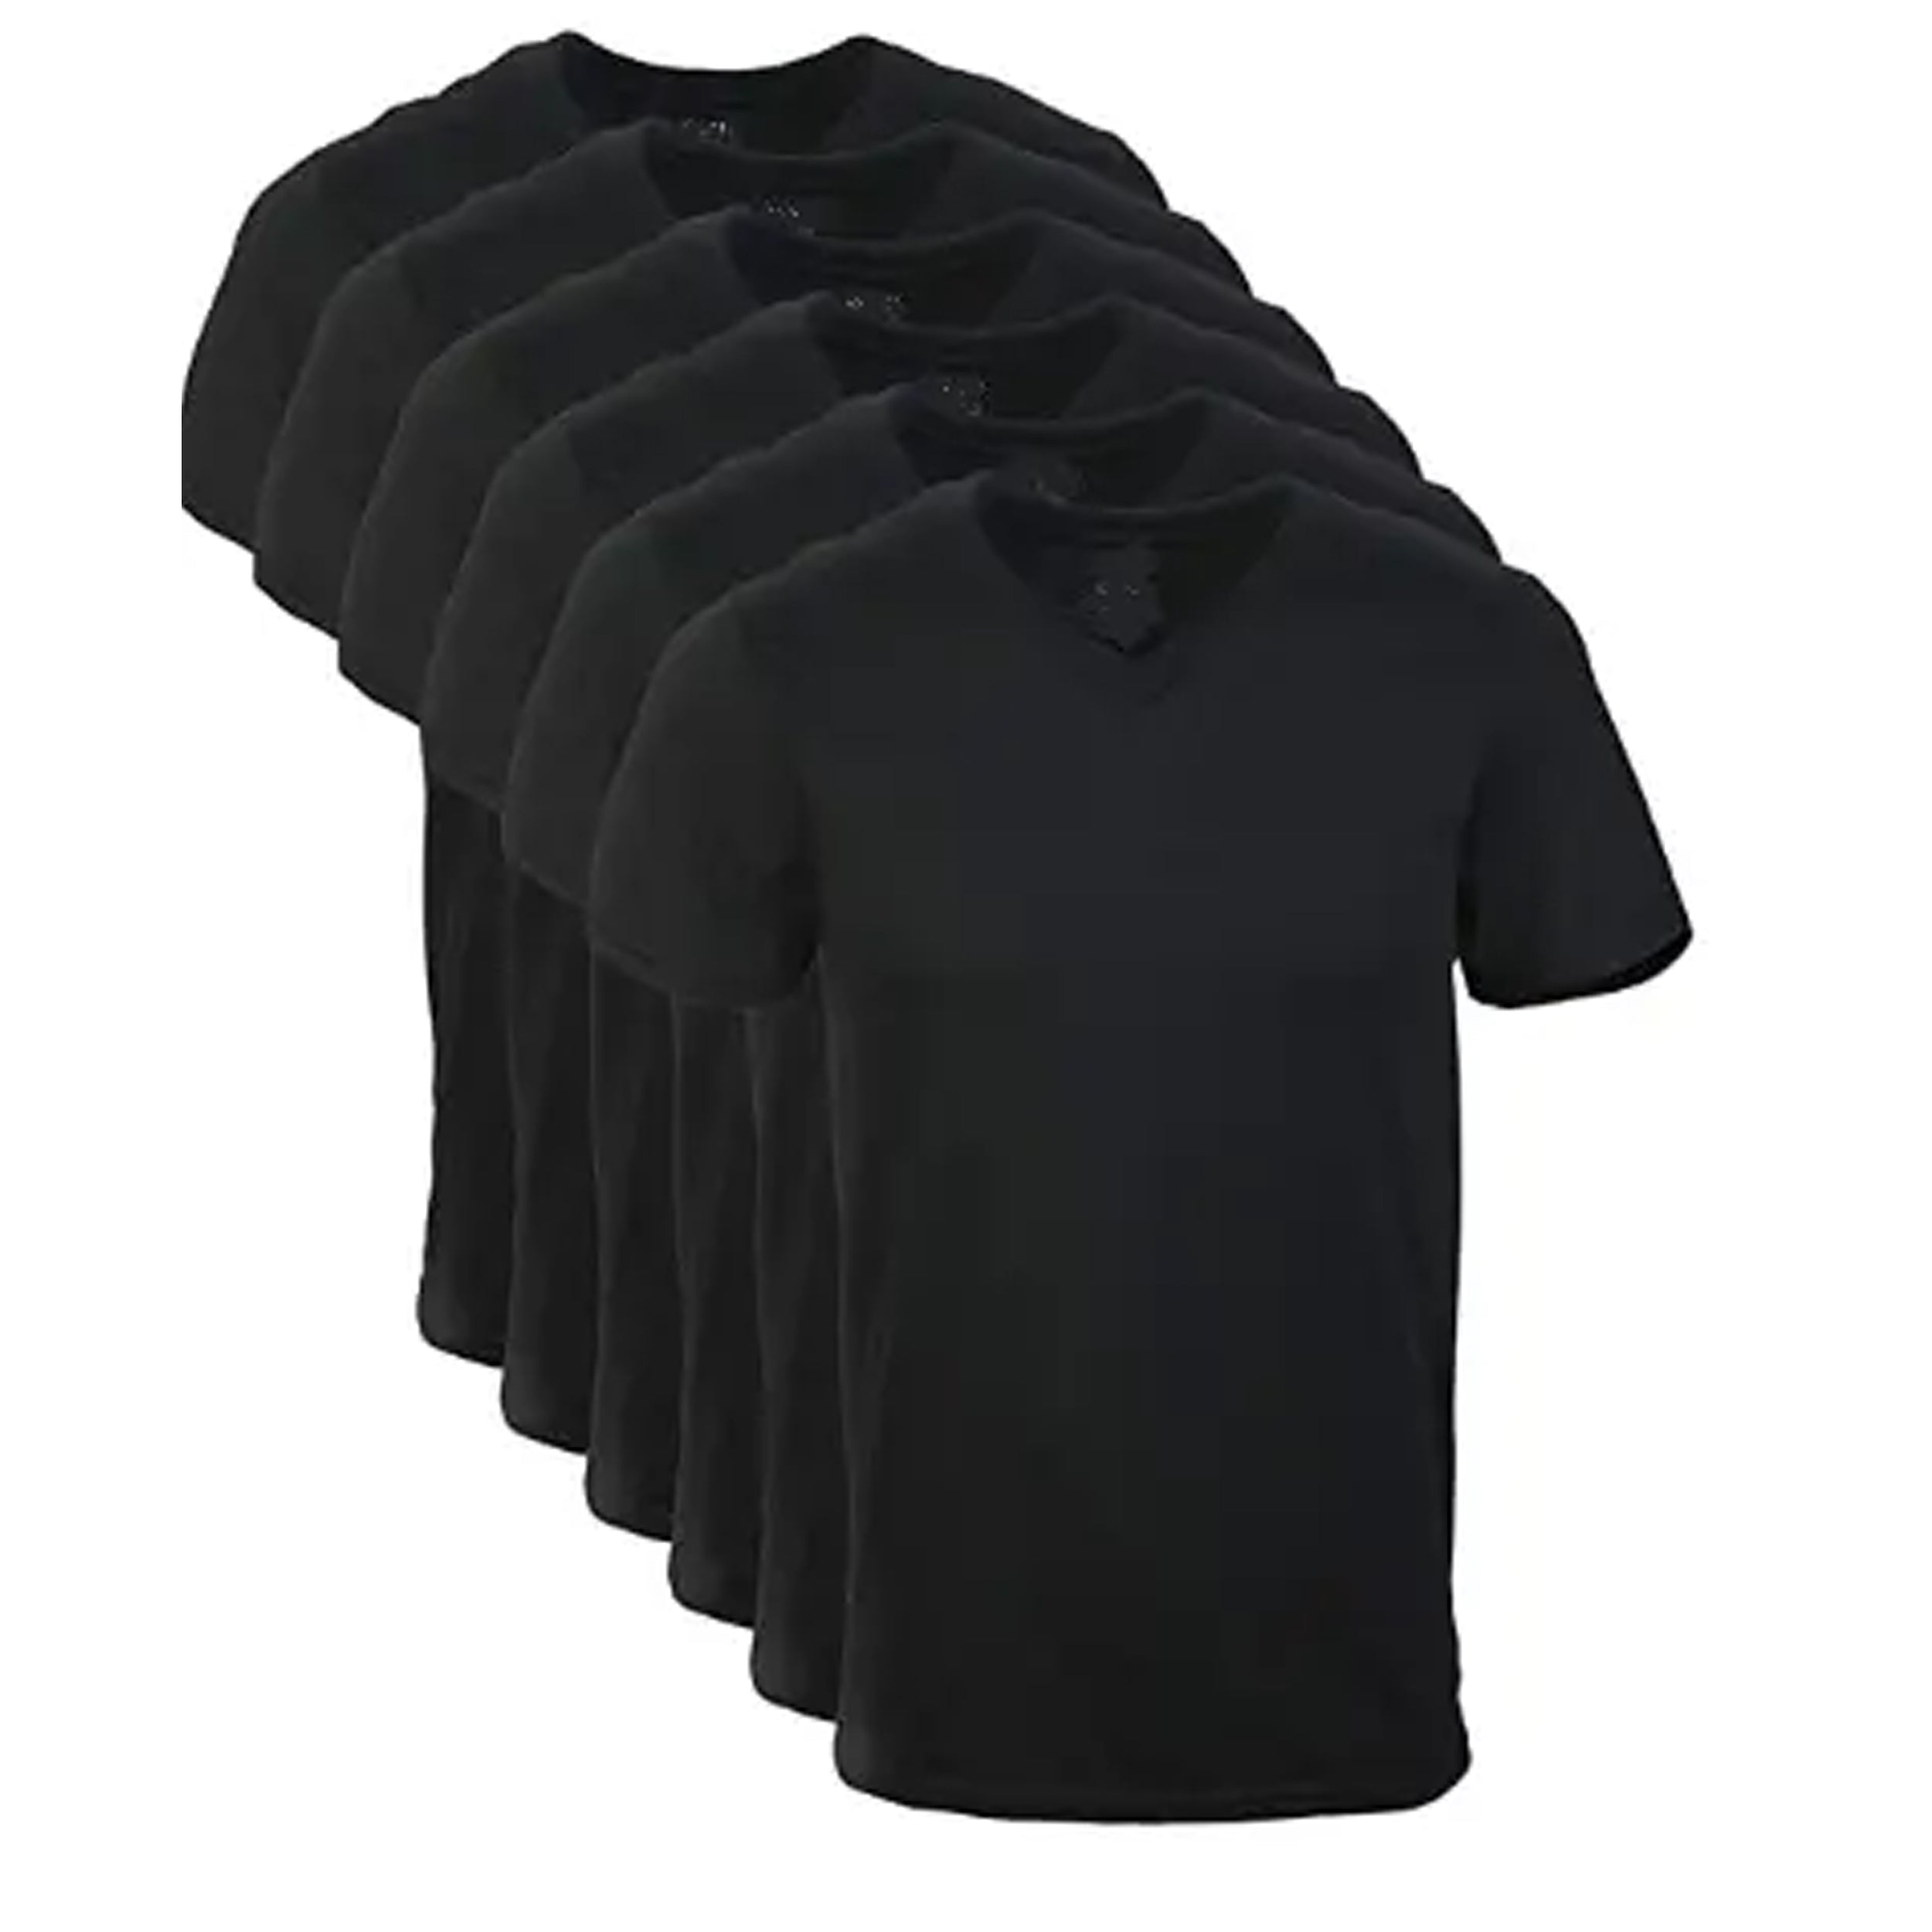 Multipack 100% Cotton Machine Wash Men's V-Neck T-Shirts in Fashion